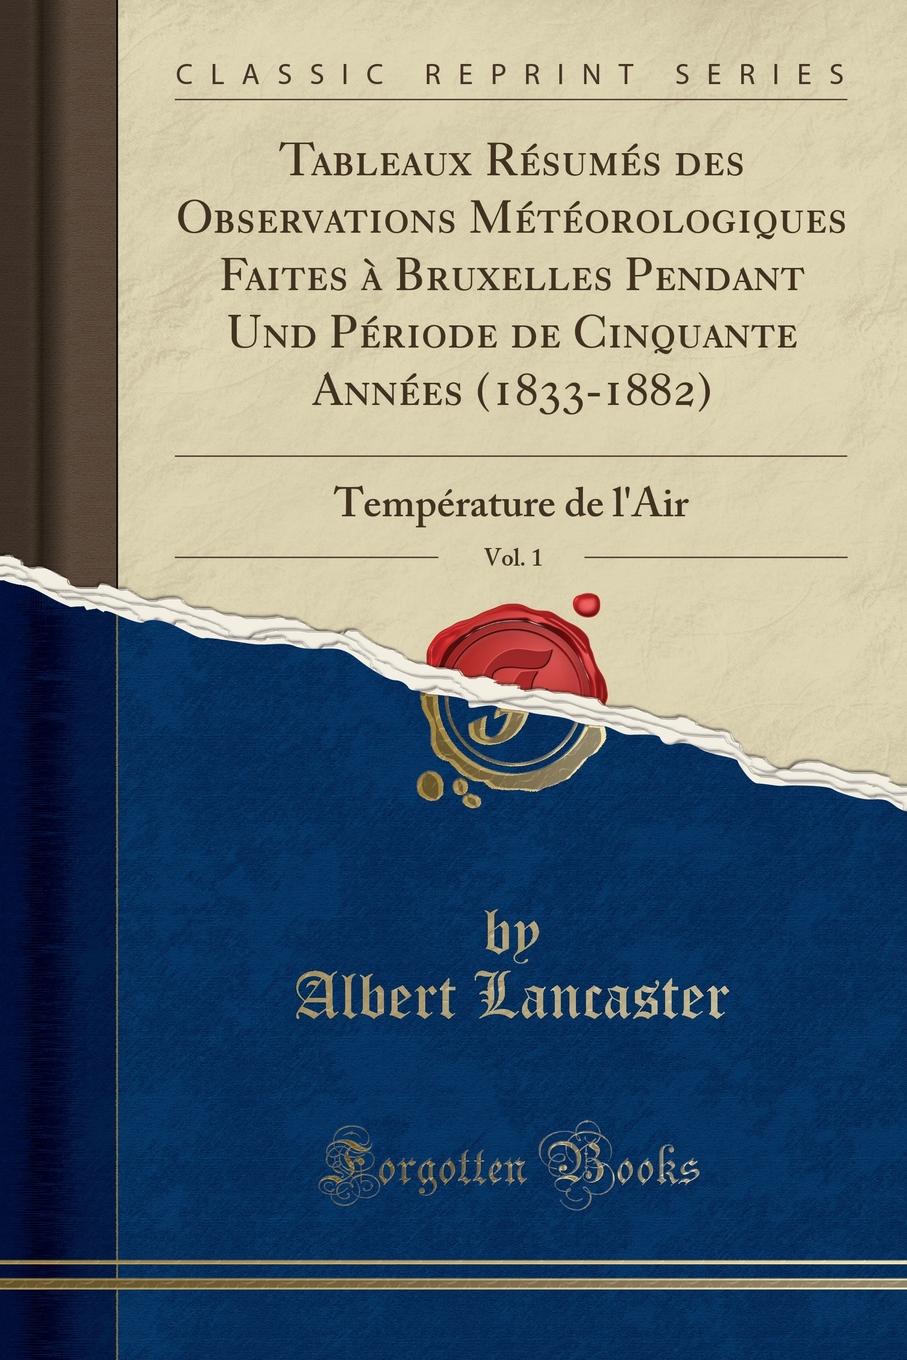 Albert Lancaster Tableaux Resumes des Observations Meteorologiques Faites a Bruxelles Pendant Und Periode de Cinquante Annees (1833-1882), Vol. 1. Temperature de l.Air (Classic Reprint)